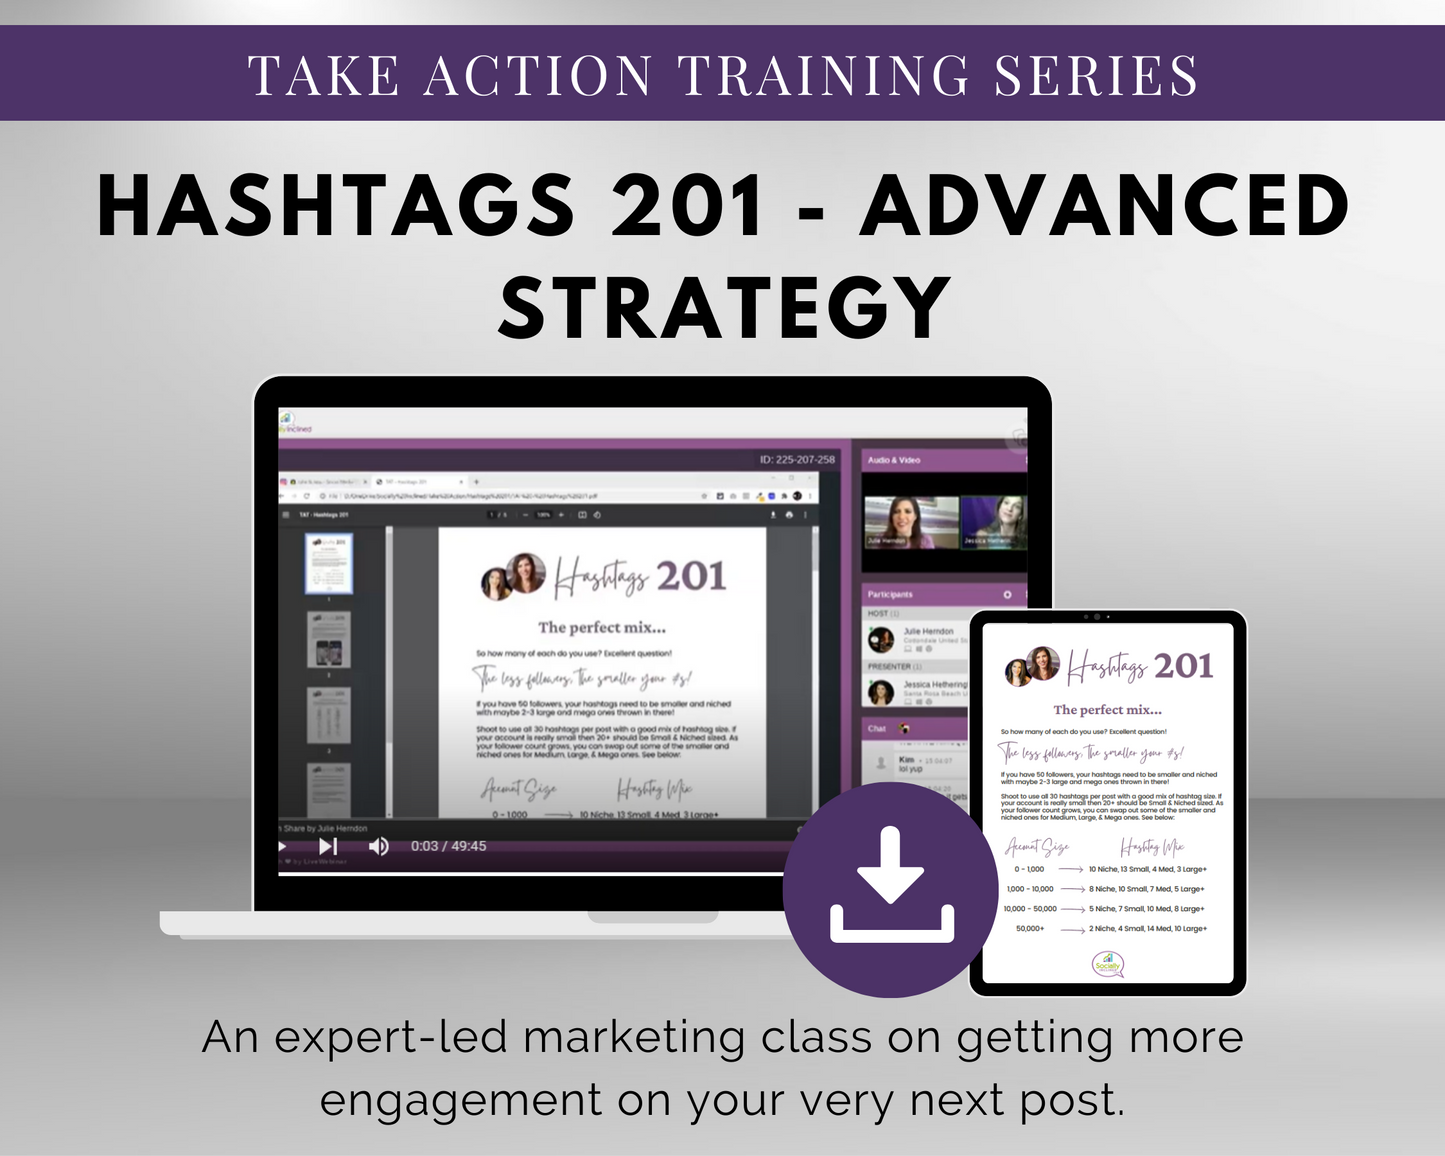 TAT - Hashtags 201 - Advanced Strategy Masterclass